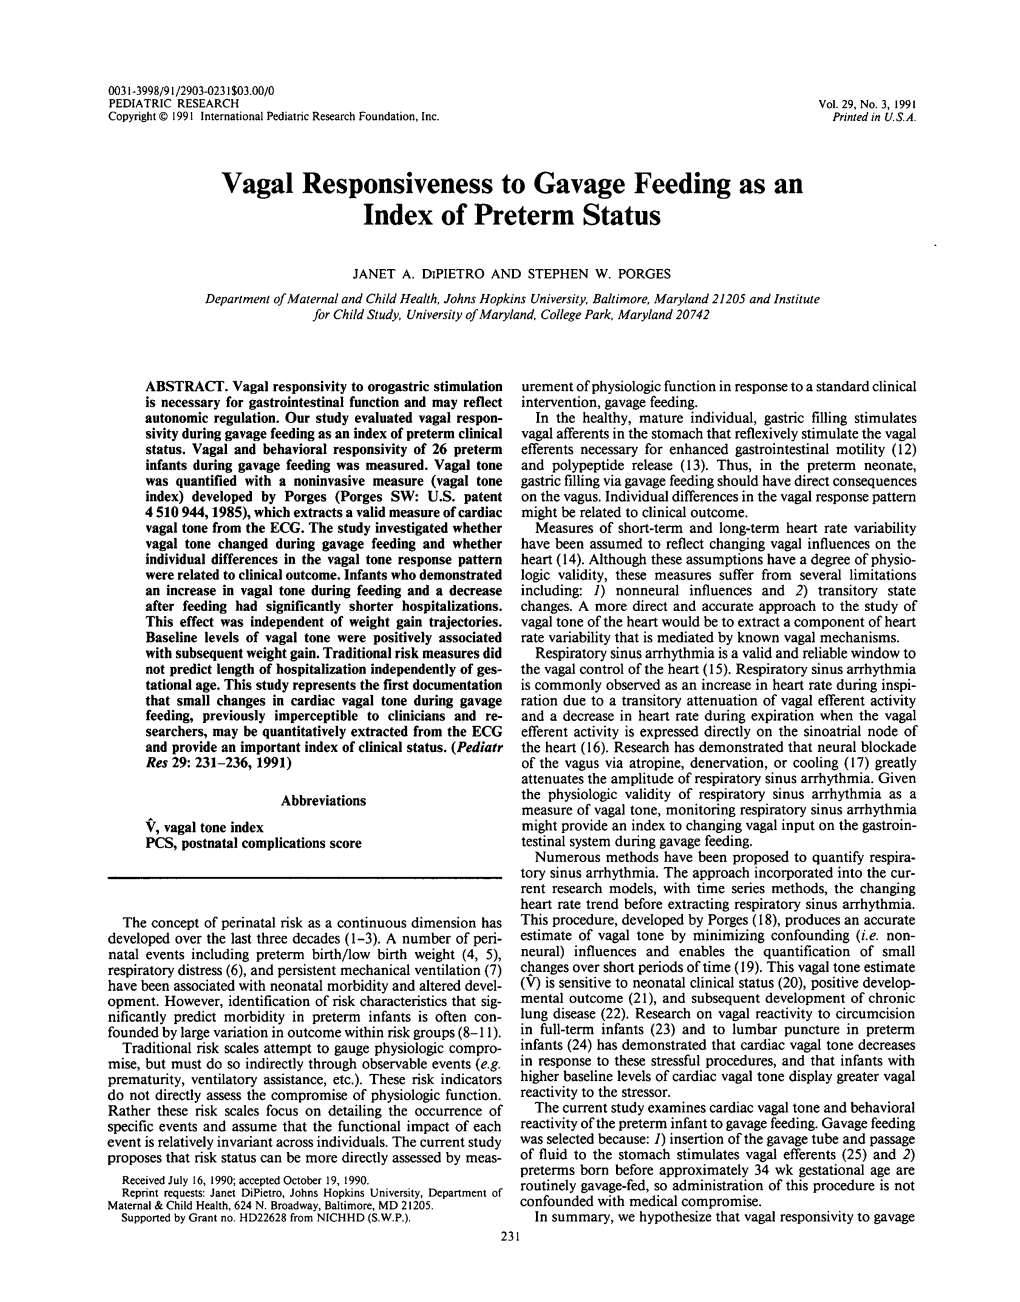 Vagal Responsiveness to Gavage Feeding As an Index of Preterm Status